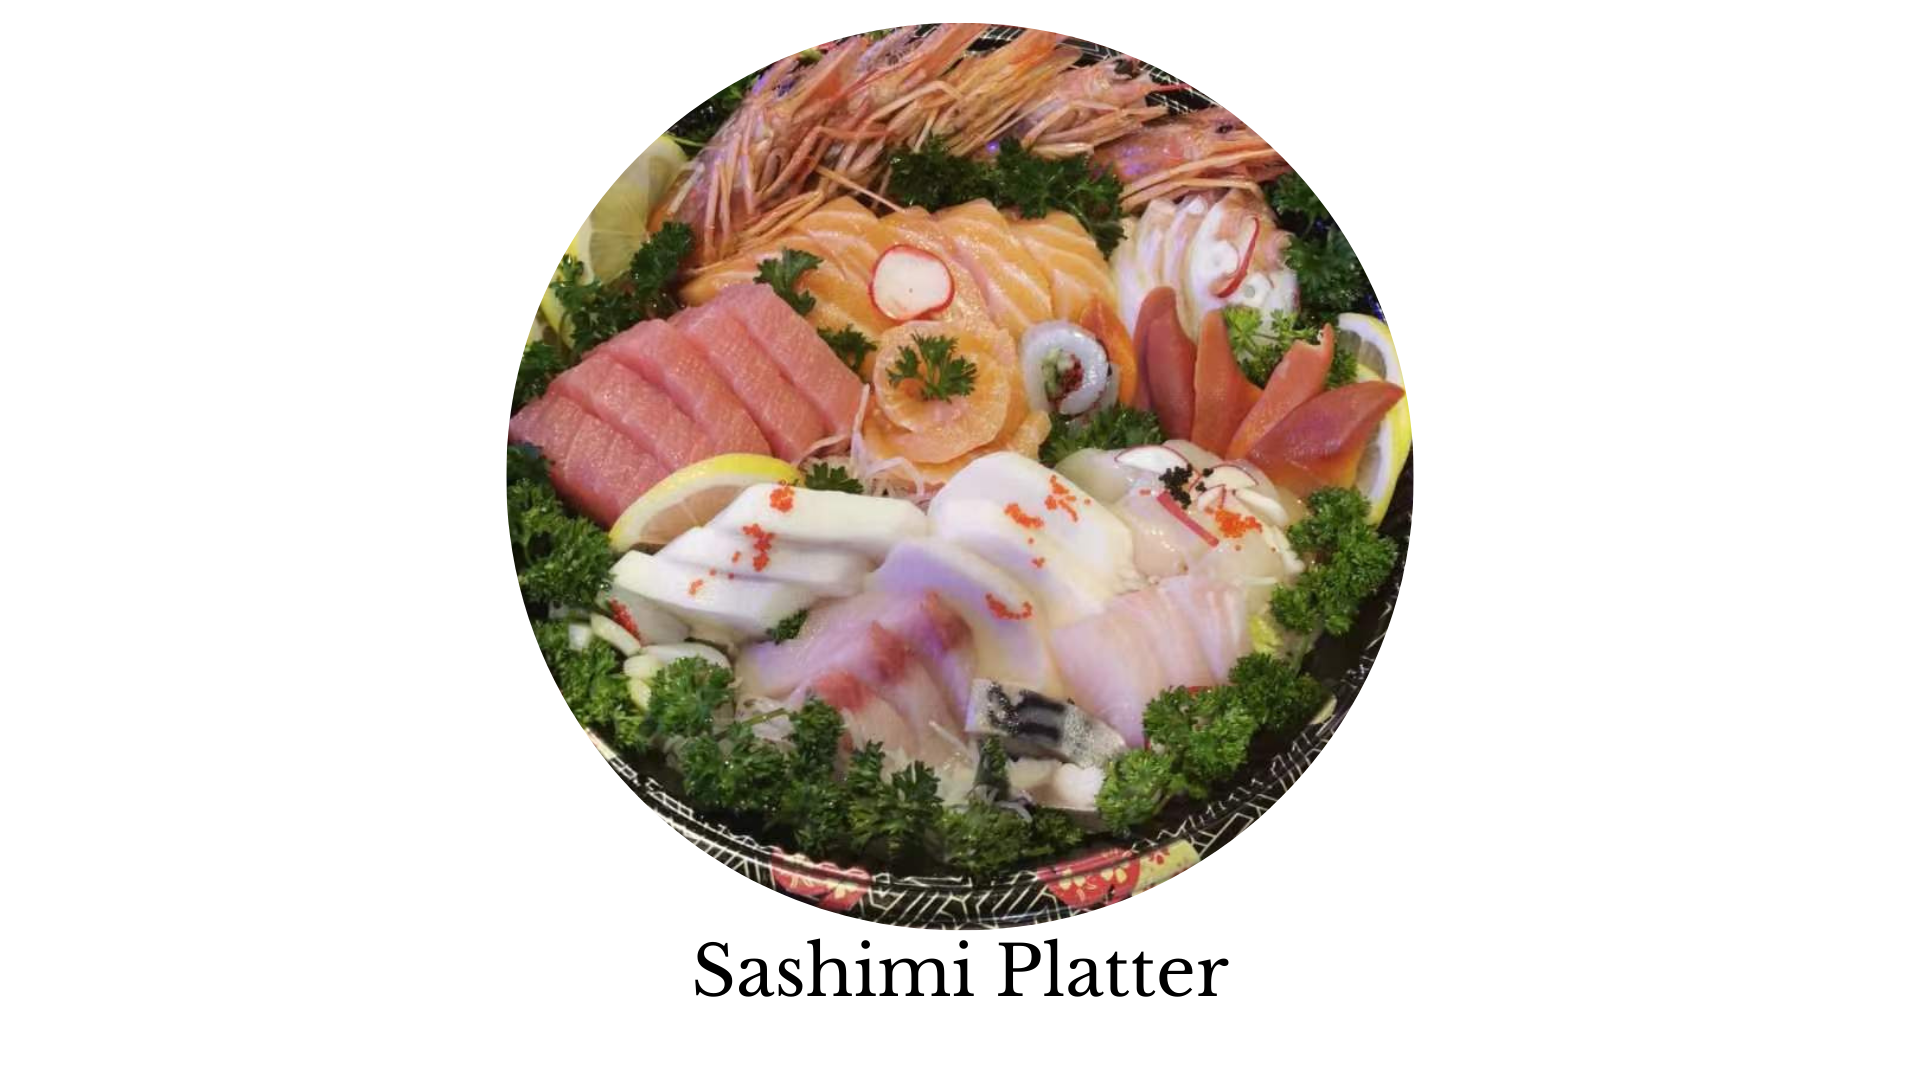 sashimi platter, sushi, sashimi, sushi near me, sushi places near me, best sushi near me, sushi rice